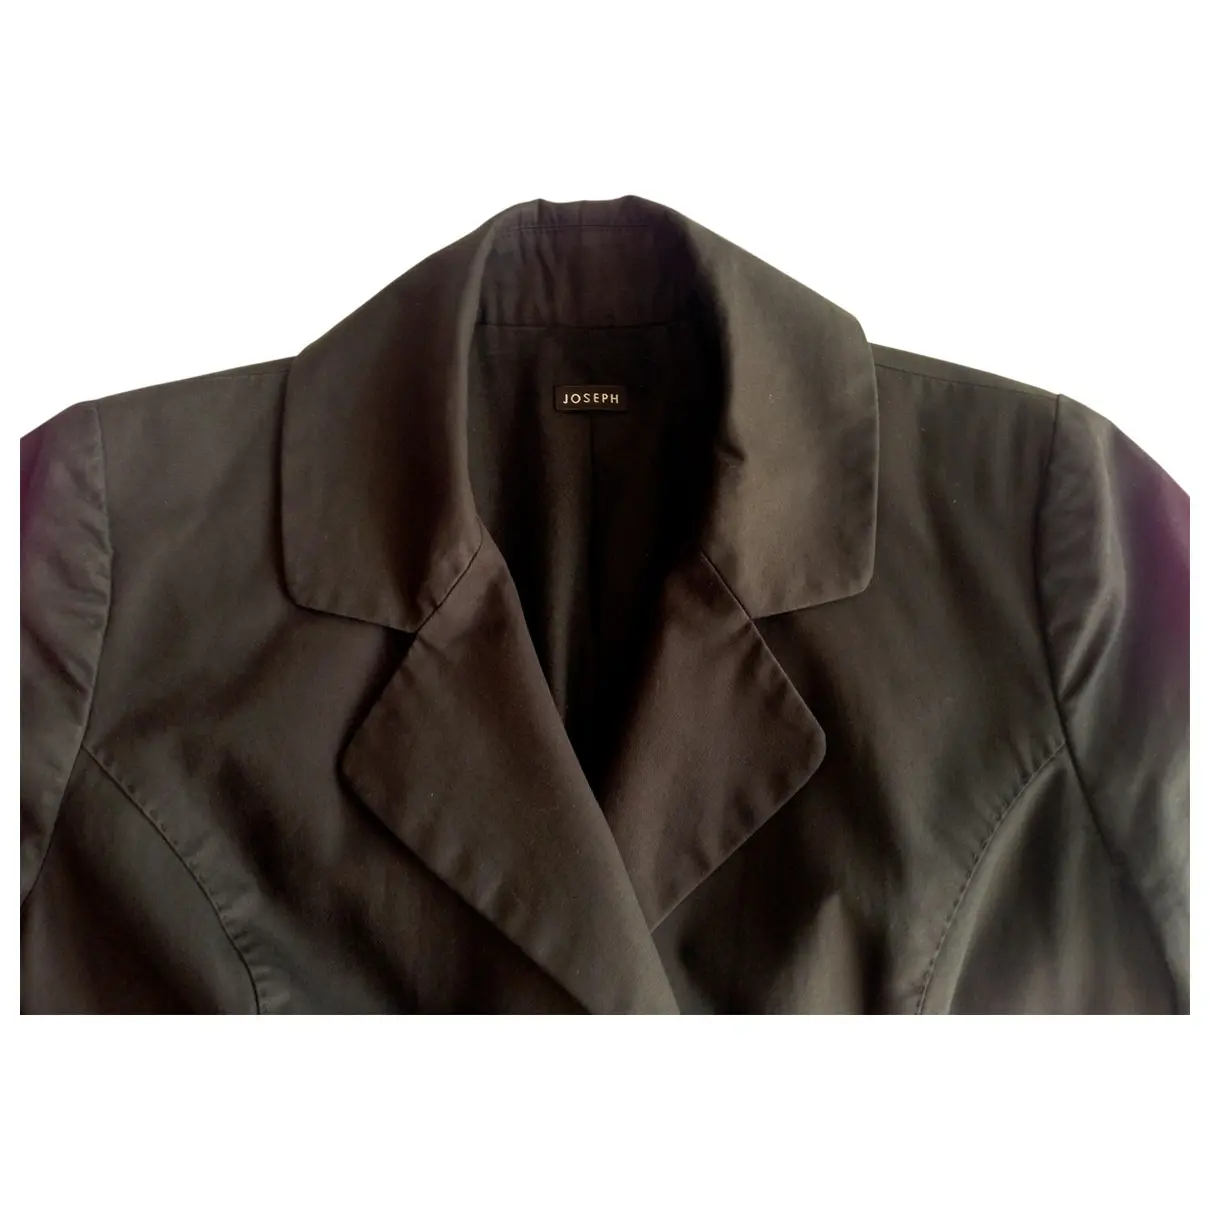 Joseph Trench coat for sale